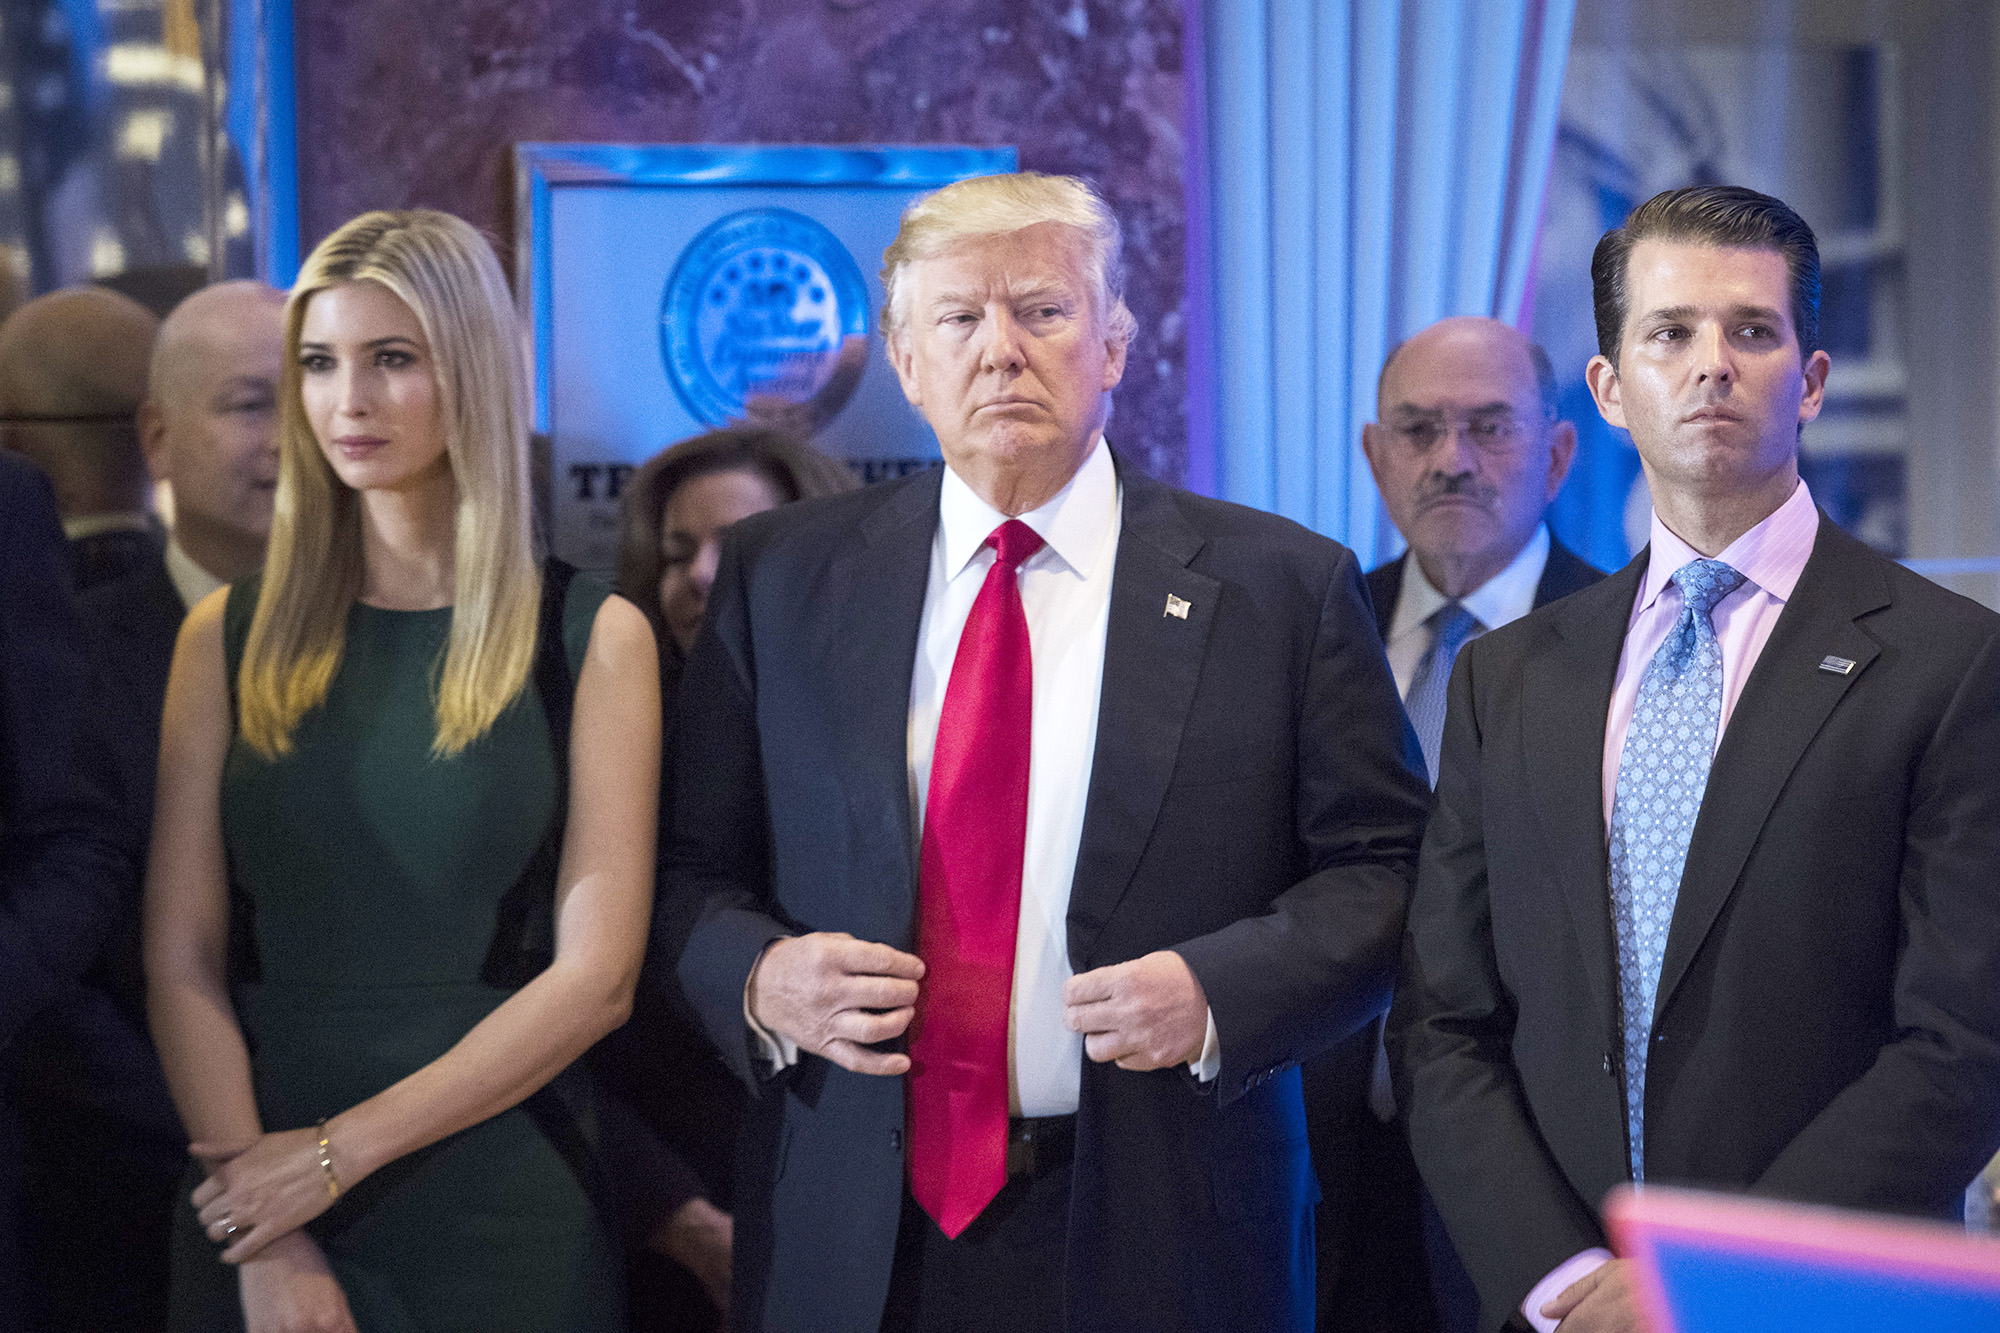 PHOTO: Donald Trump, Ivanka Trump, and Donald Trump Jr. attend a press conference at Trump Tower in New York, Jan. 11, 2017.